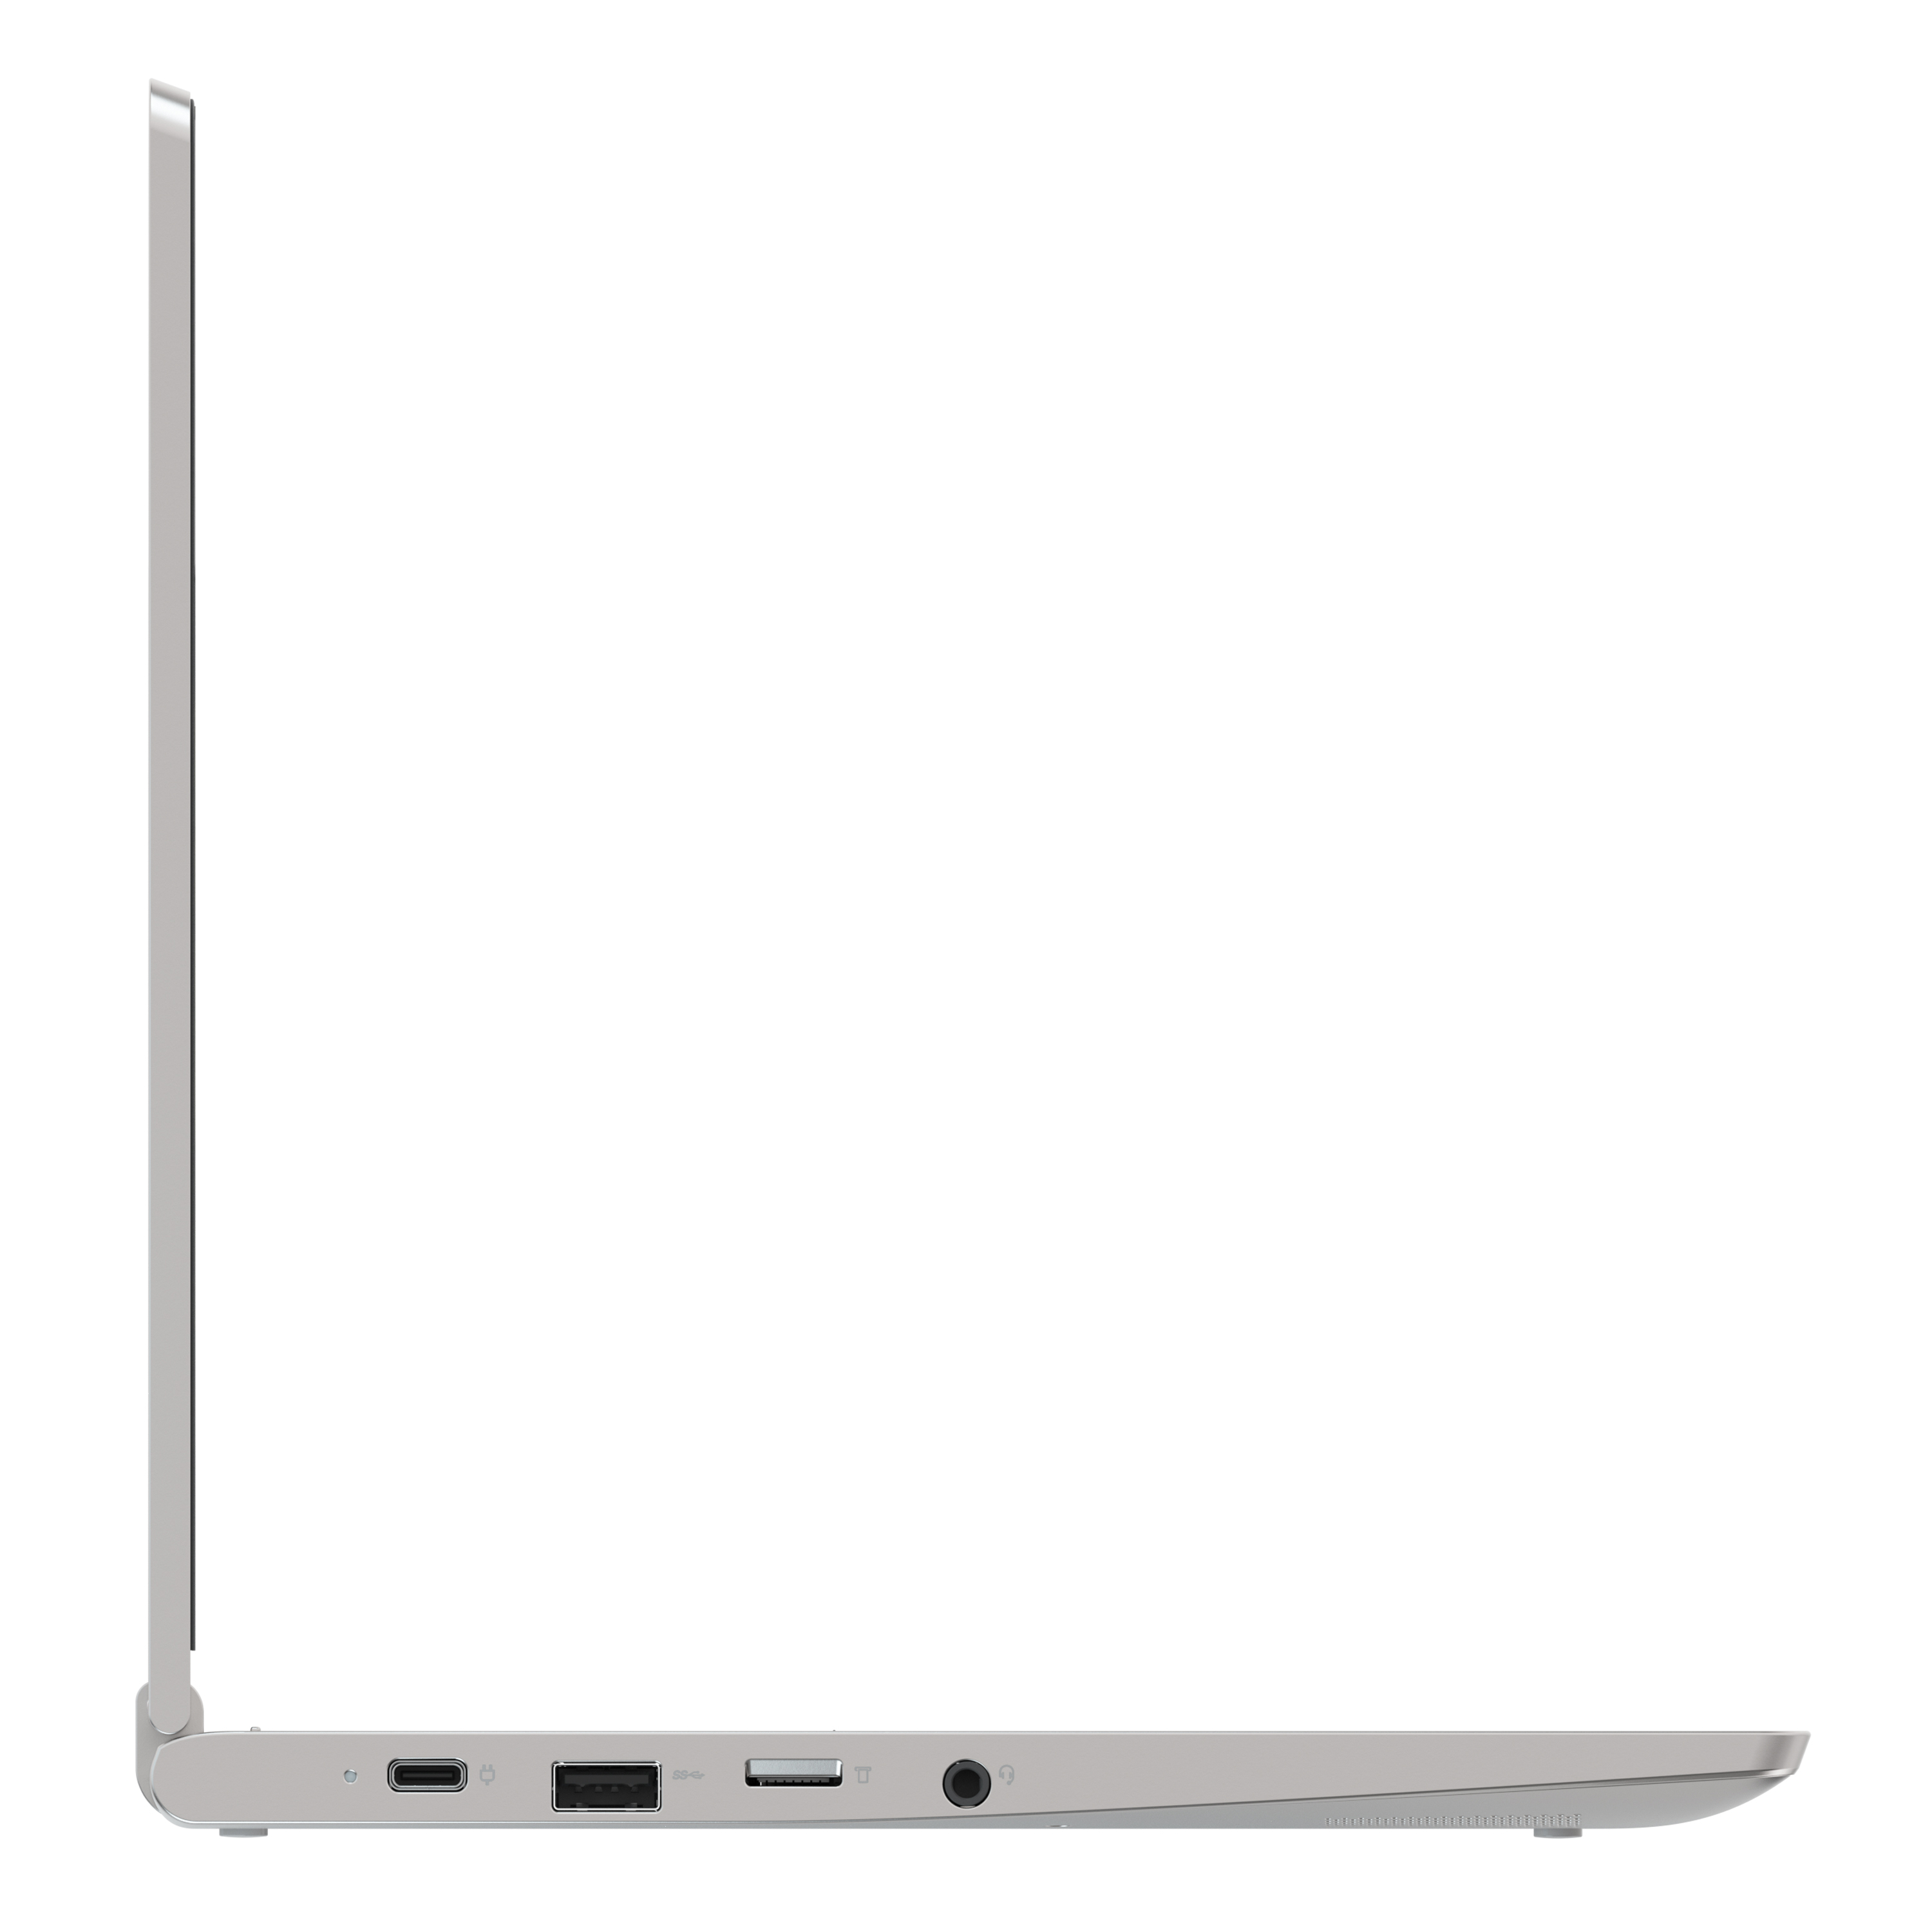 Lenovo Chromebook C340 - 11.6" Touchscreen - Intel Celeron N4000 - 4GB - 32GB eMMC - Platinum Grey - Chrome OS - 81TA0010US - image 4 of 18